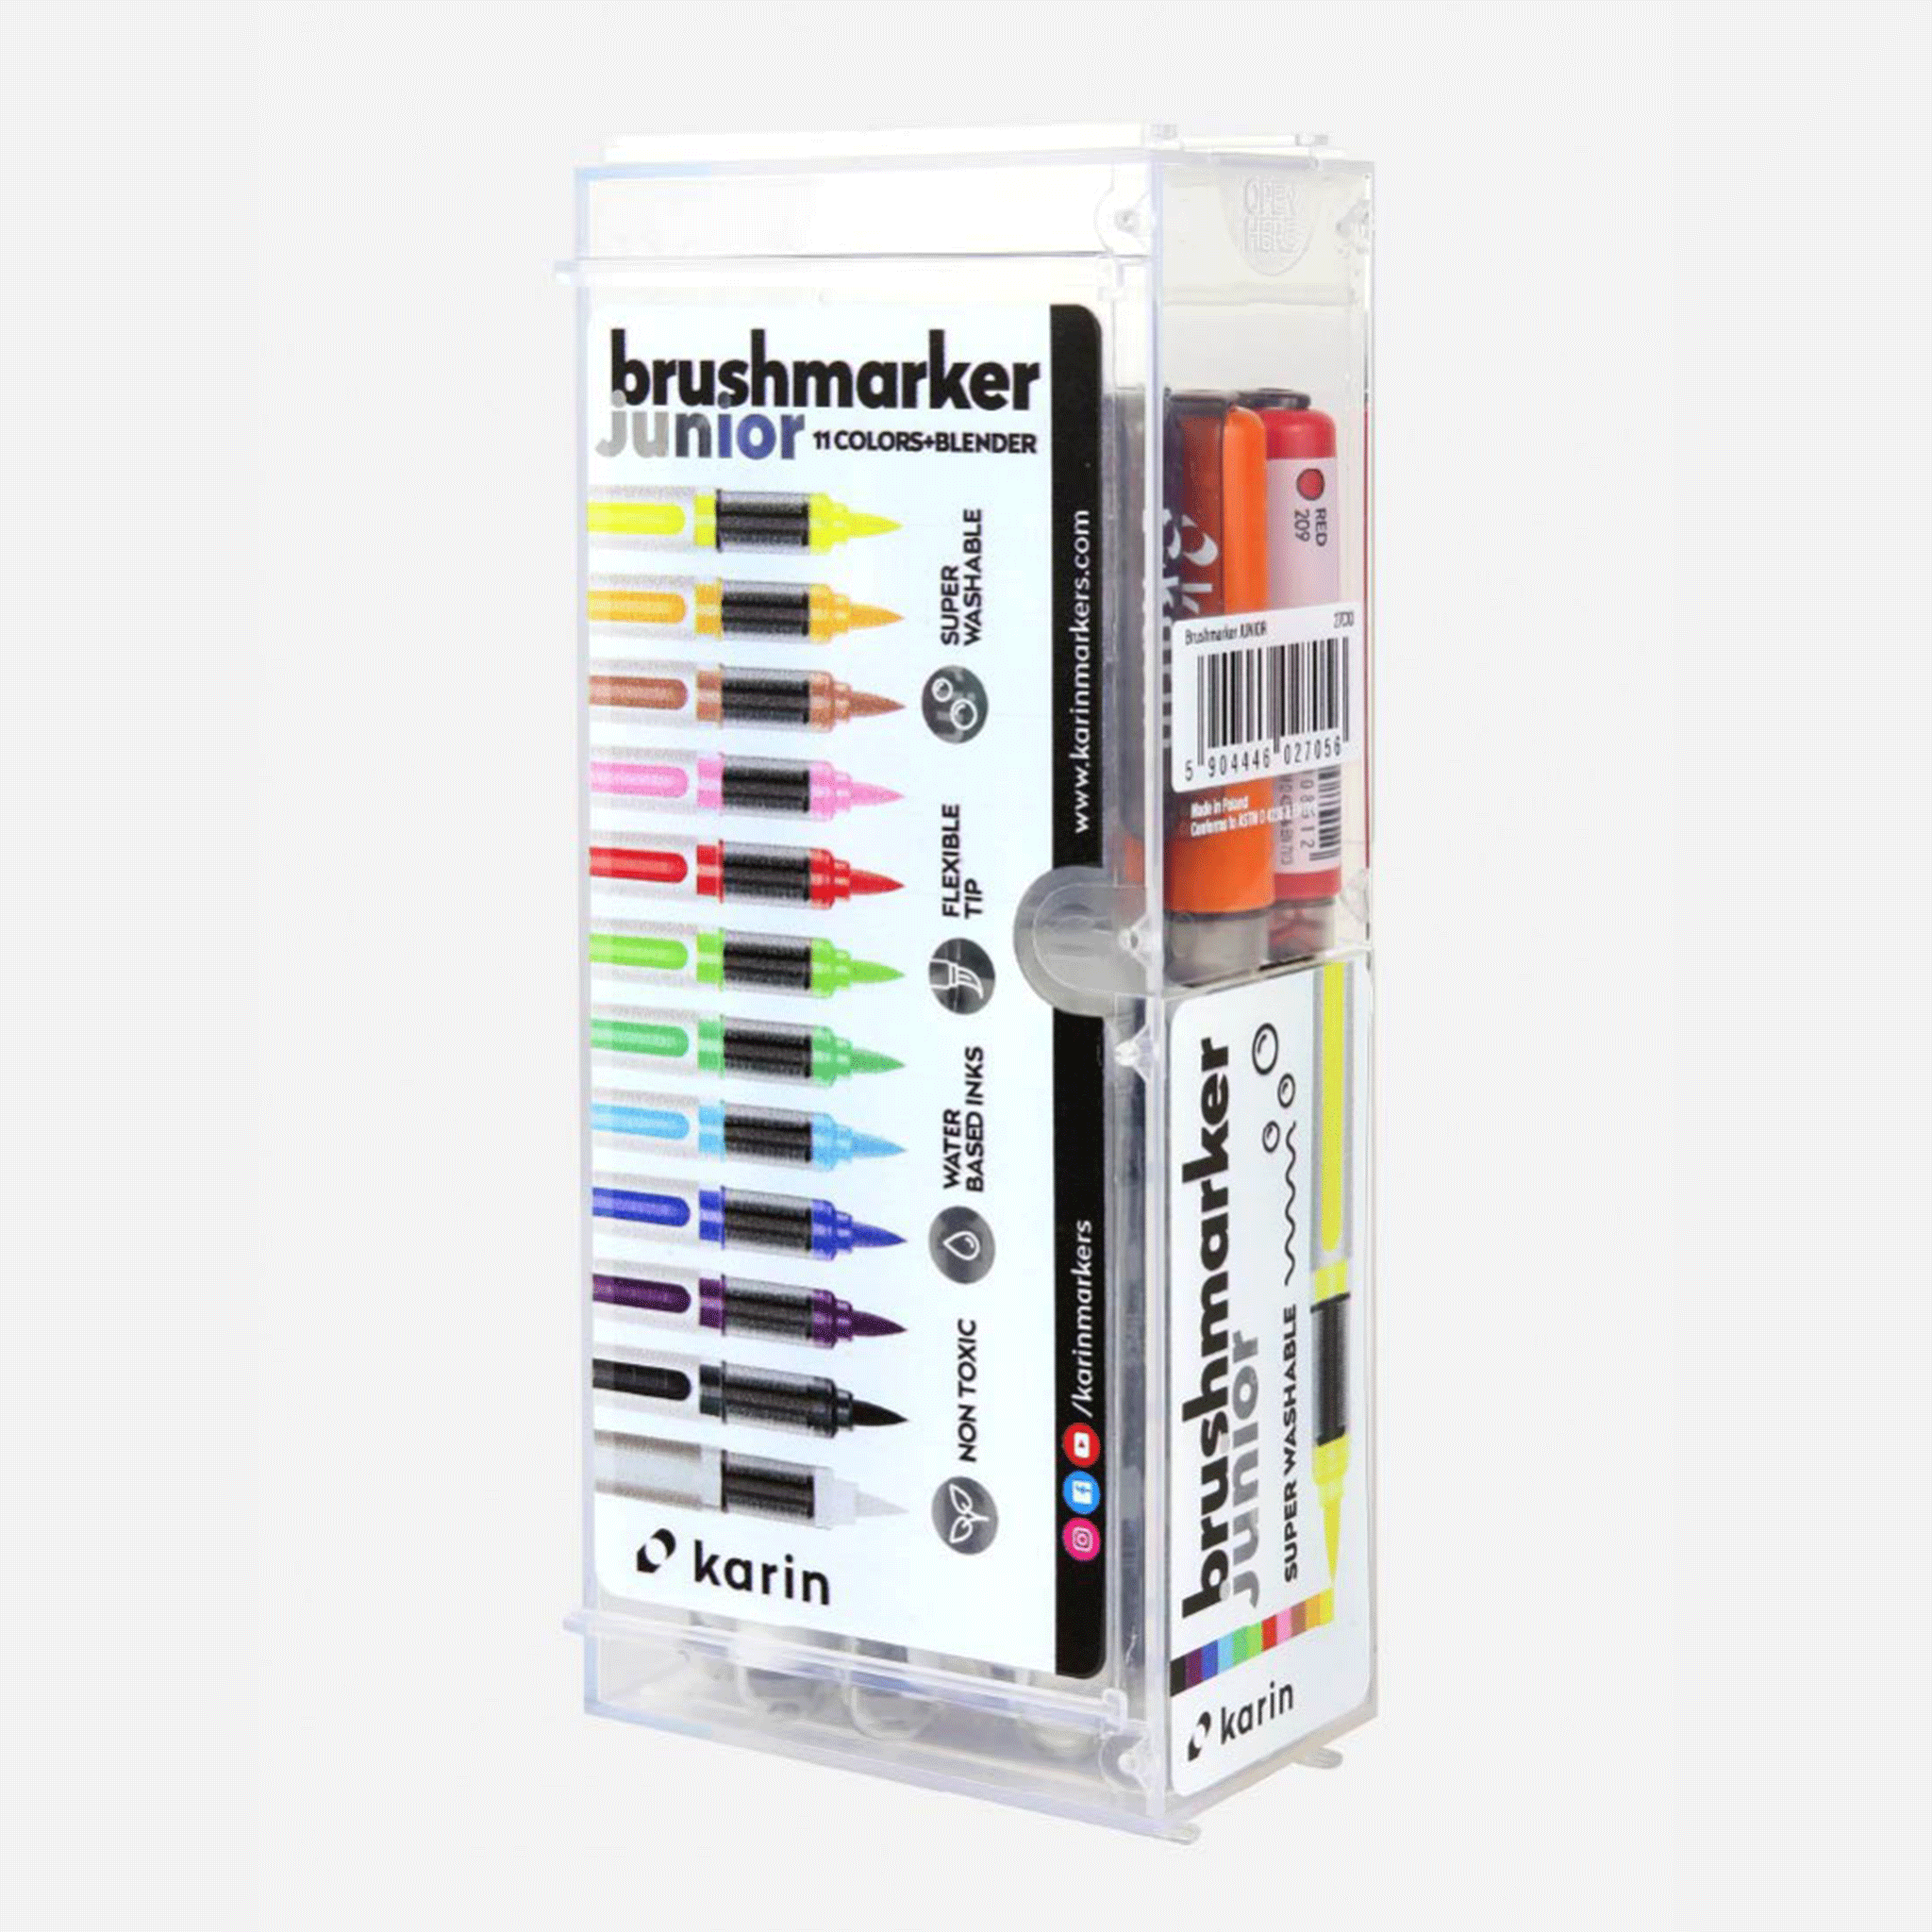 karin Brushmarker PRO Set of 12 Skin Colors - John Neal Books